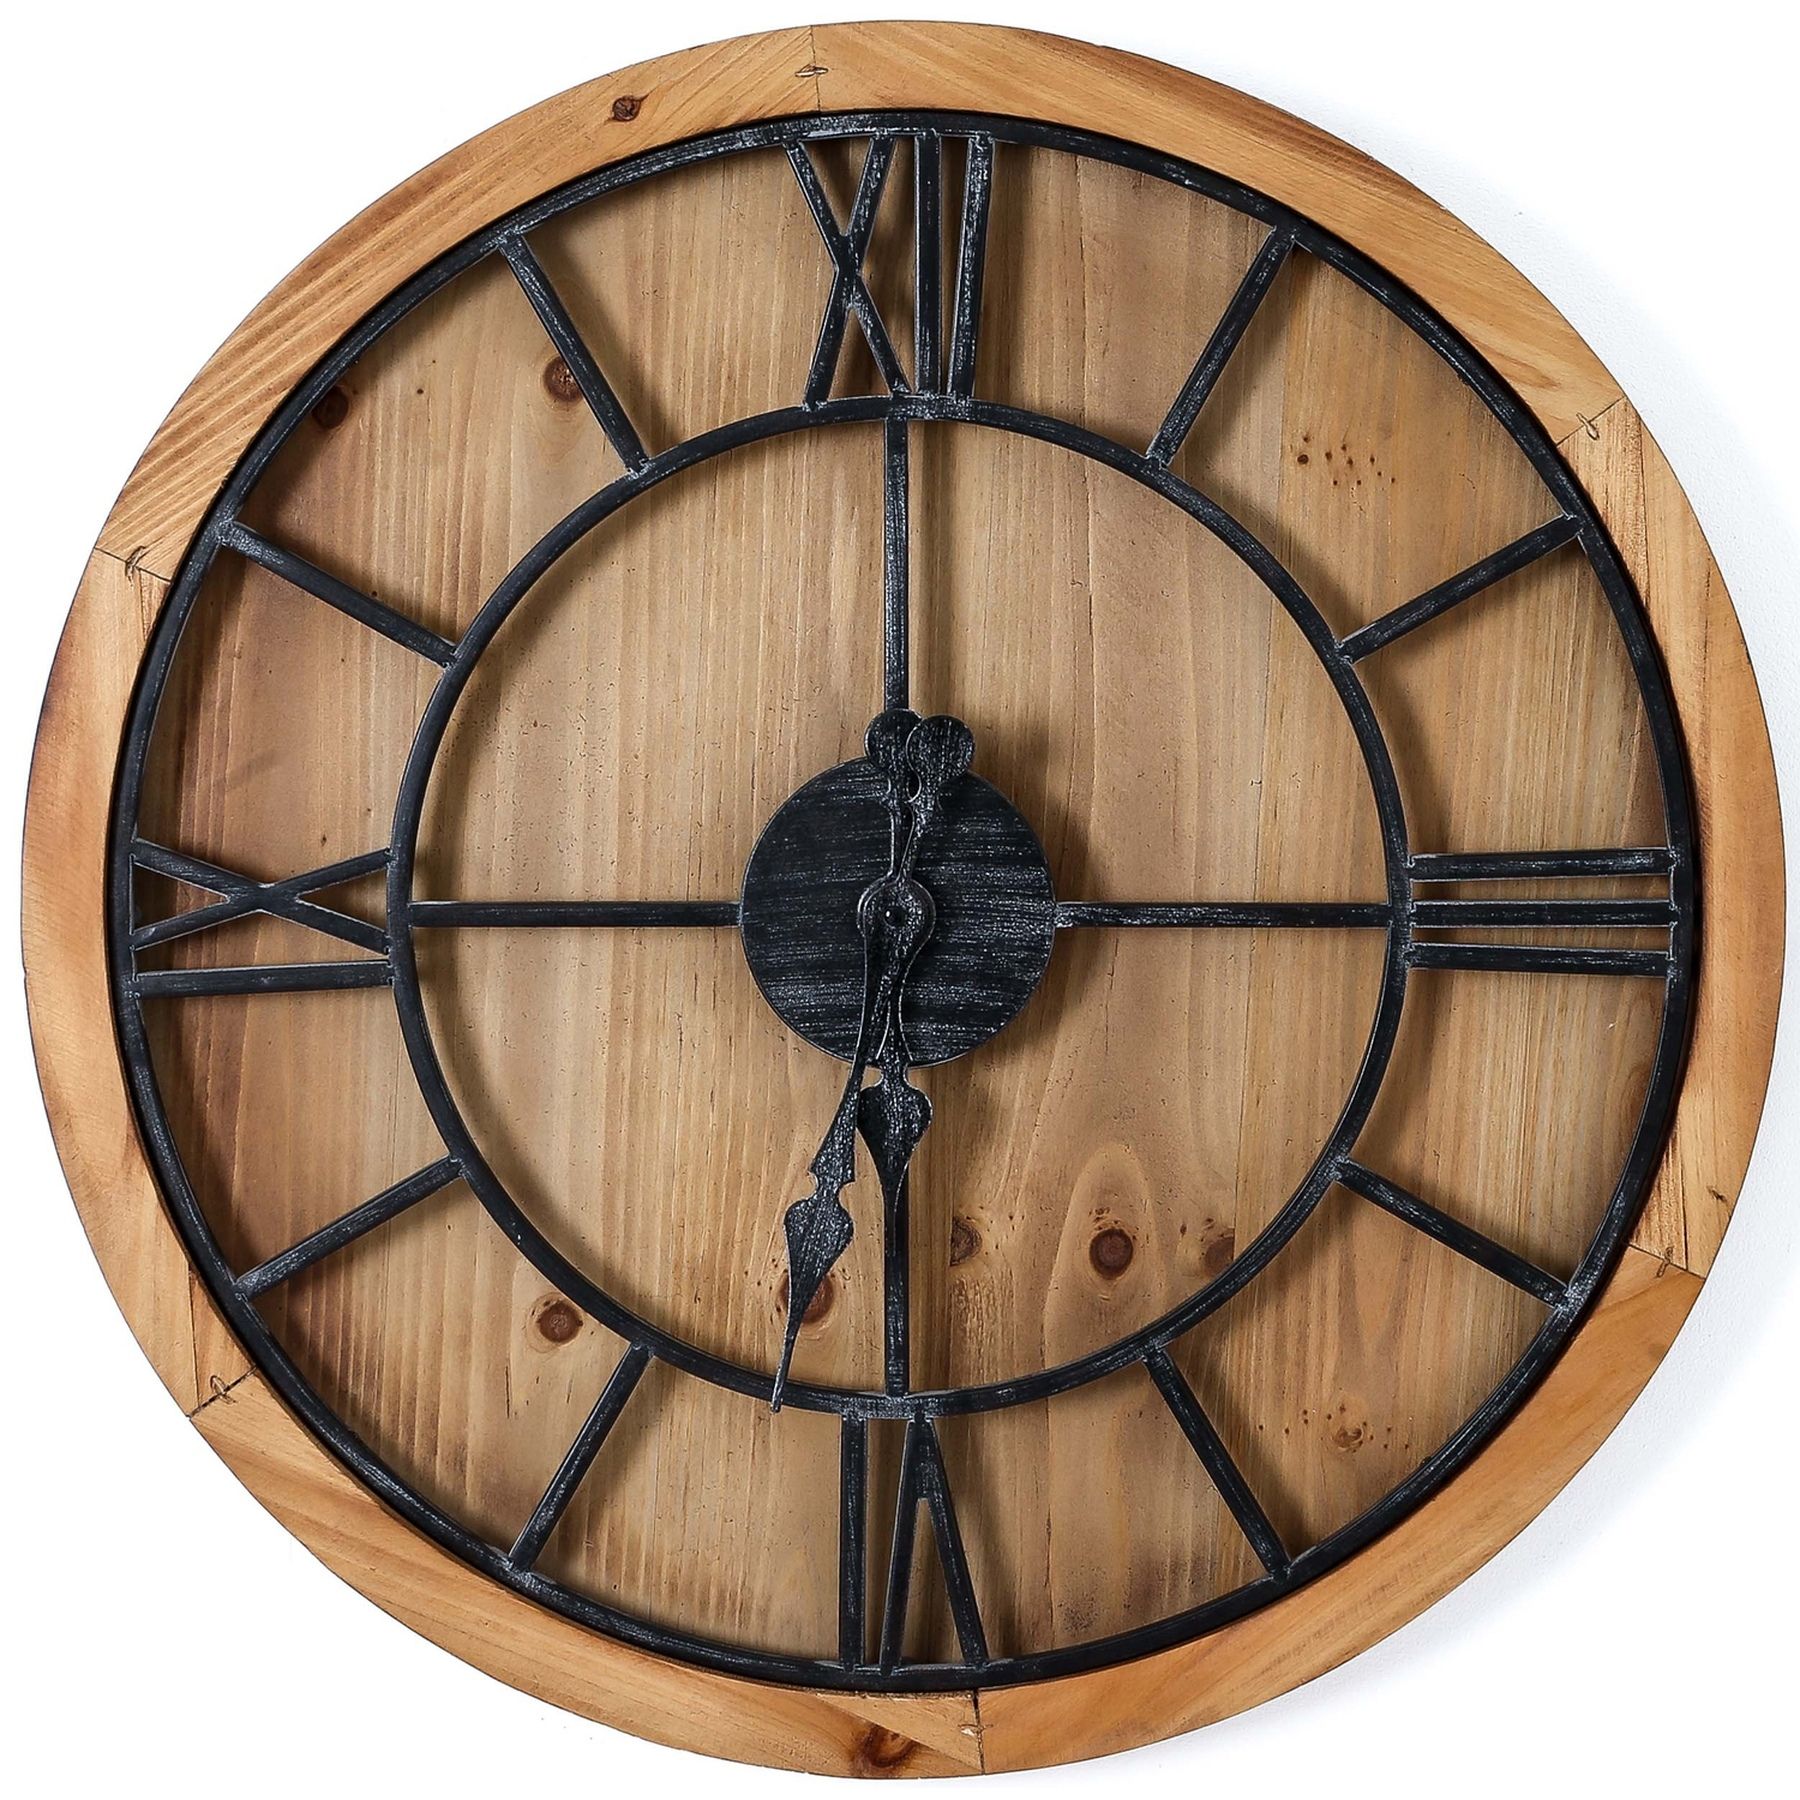 Williston Large Wooden Wall Clock - Image 1